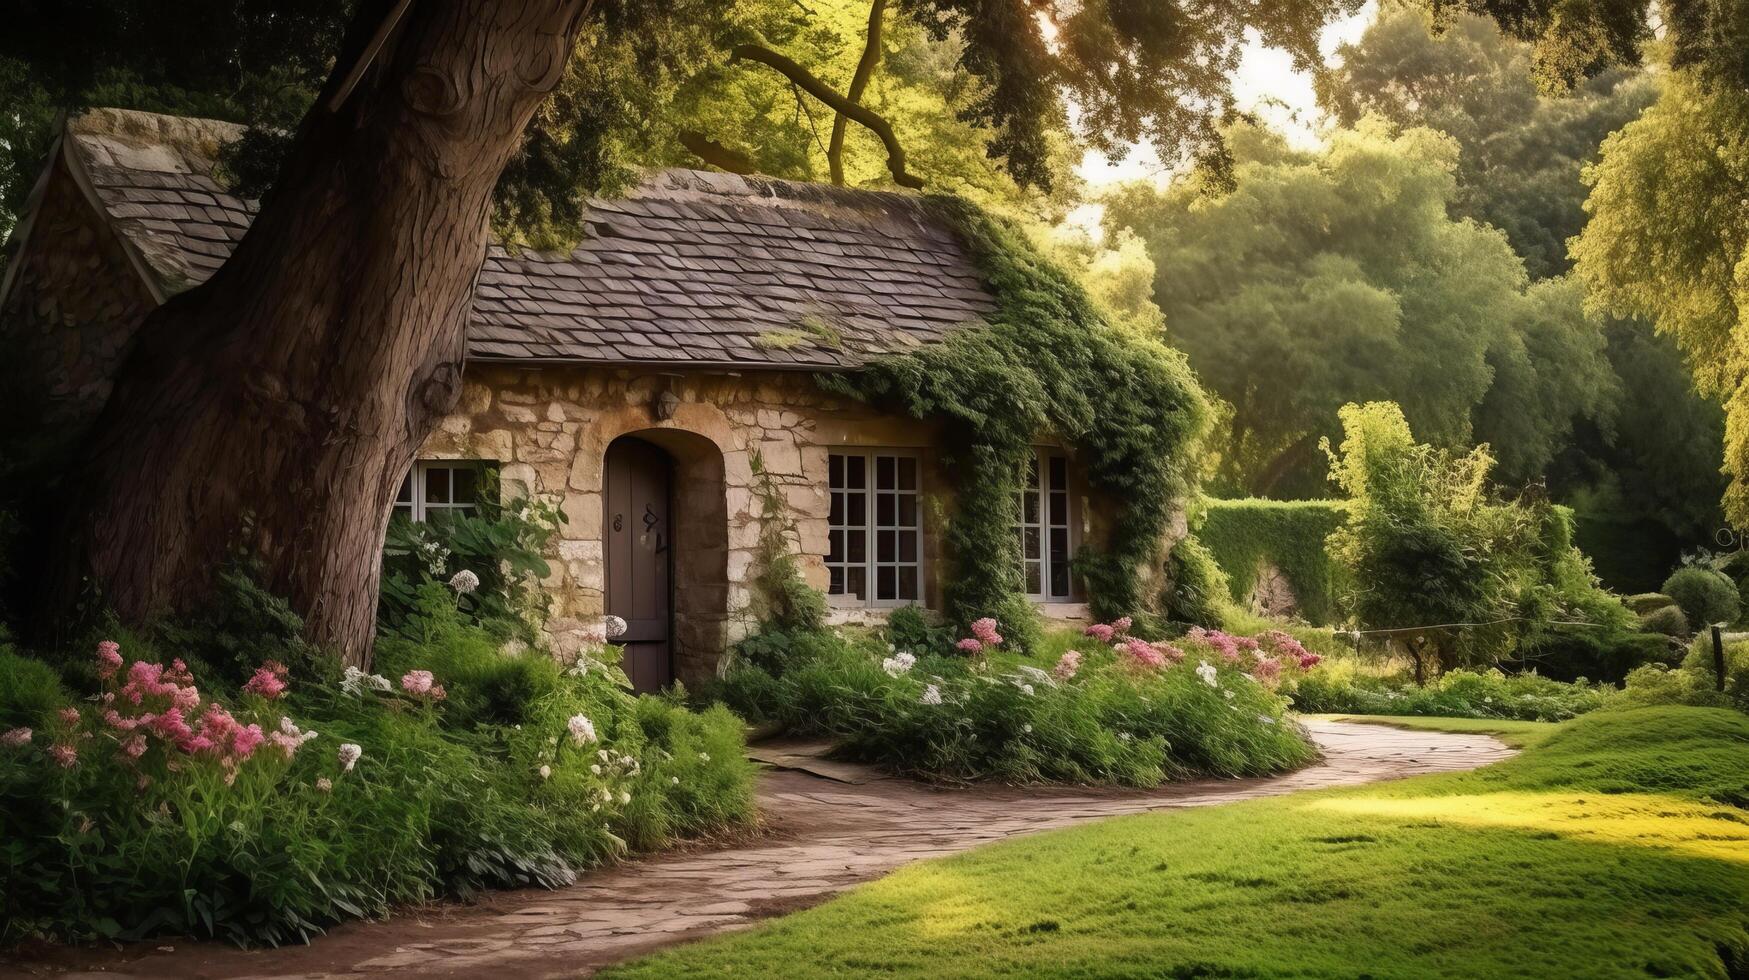 Tranquil garden surrounds ancient stone cottage photo